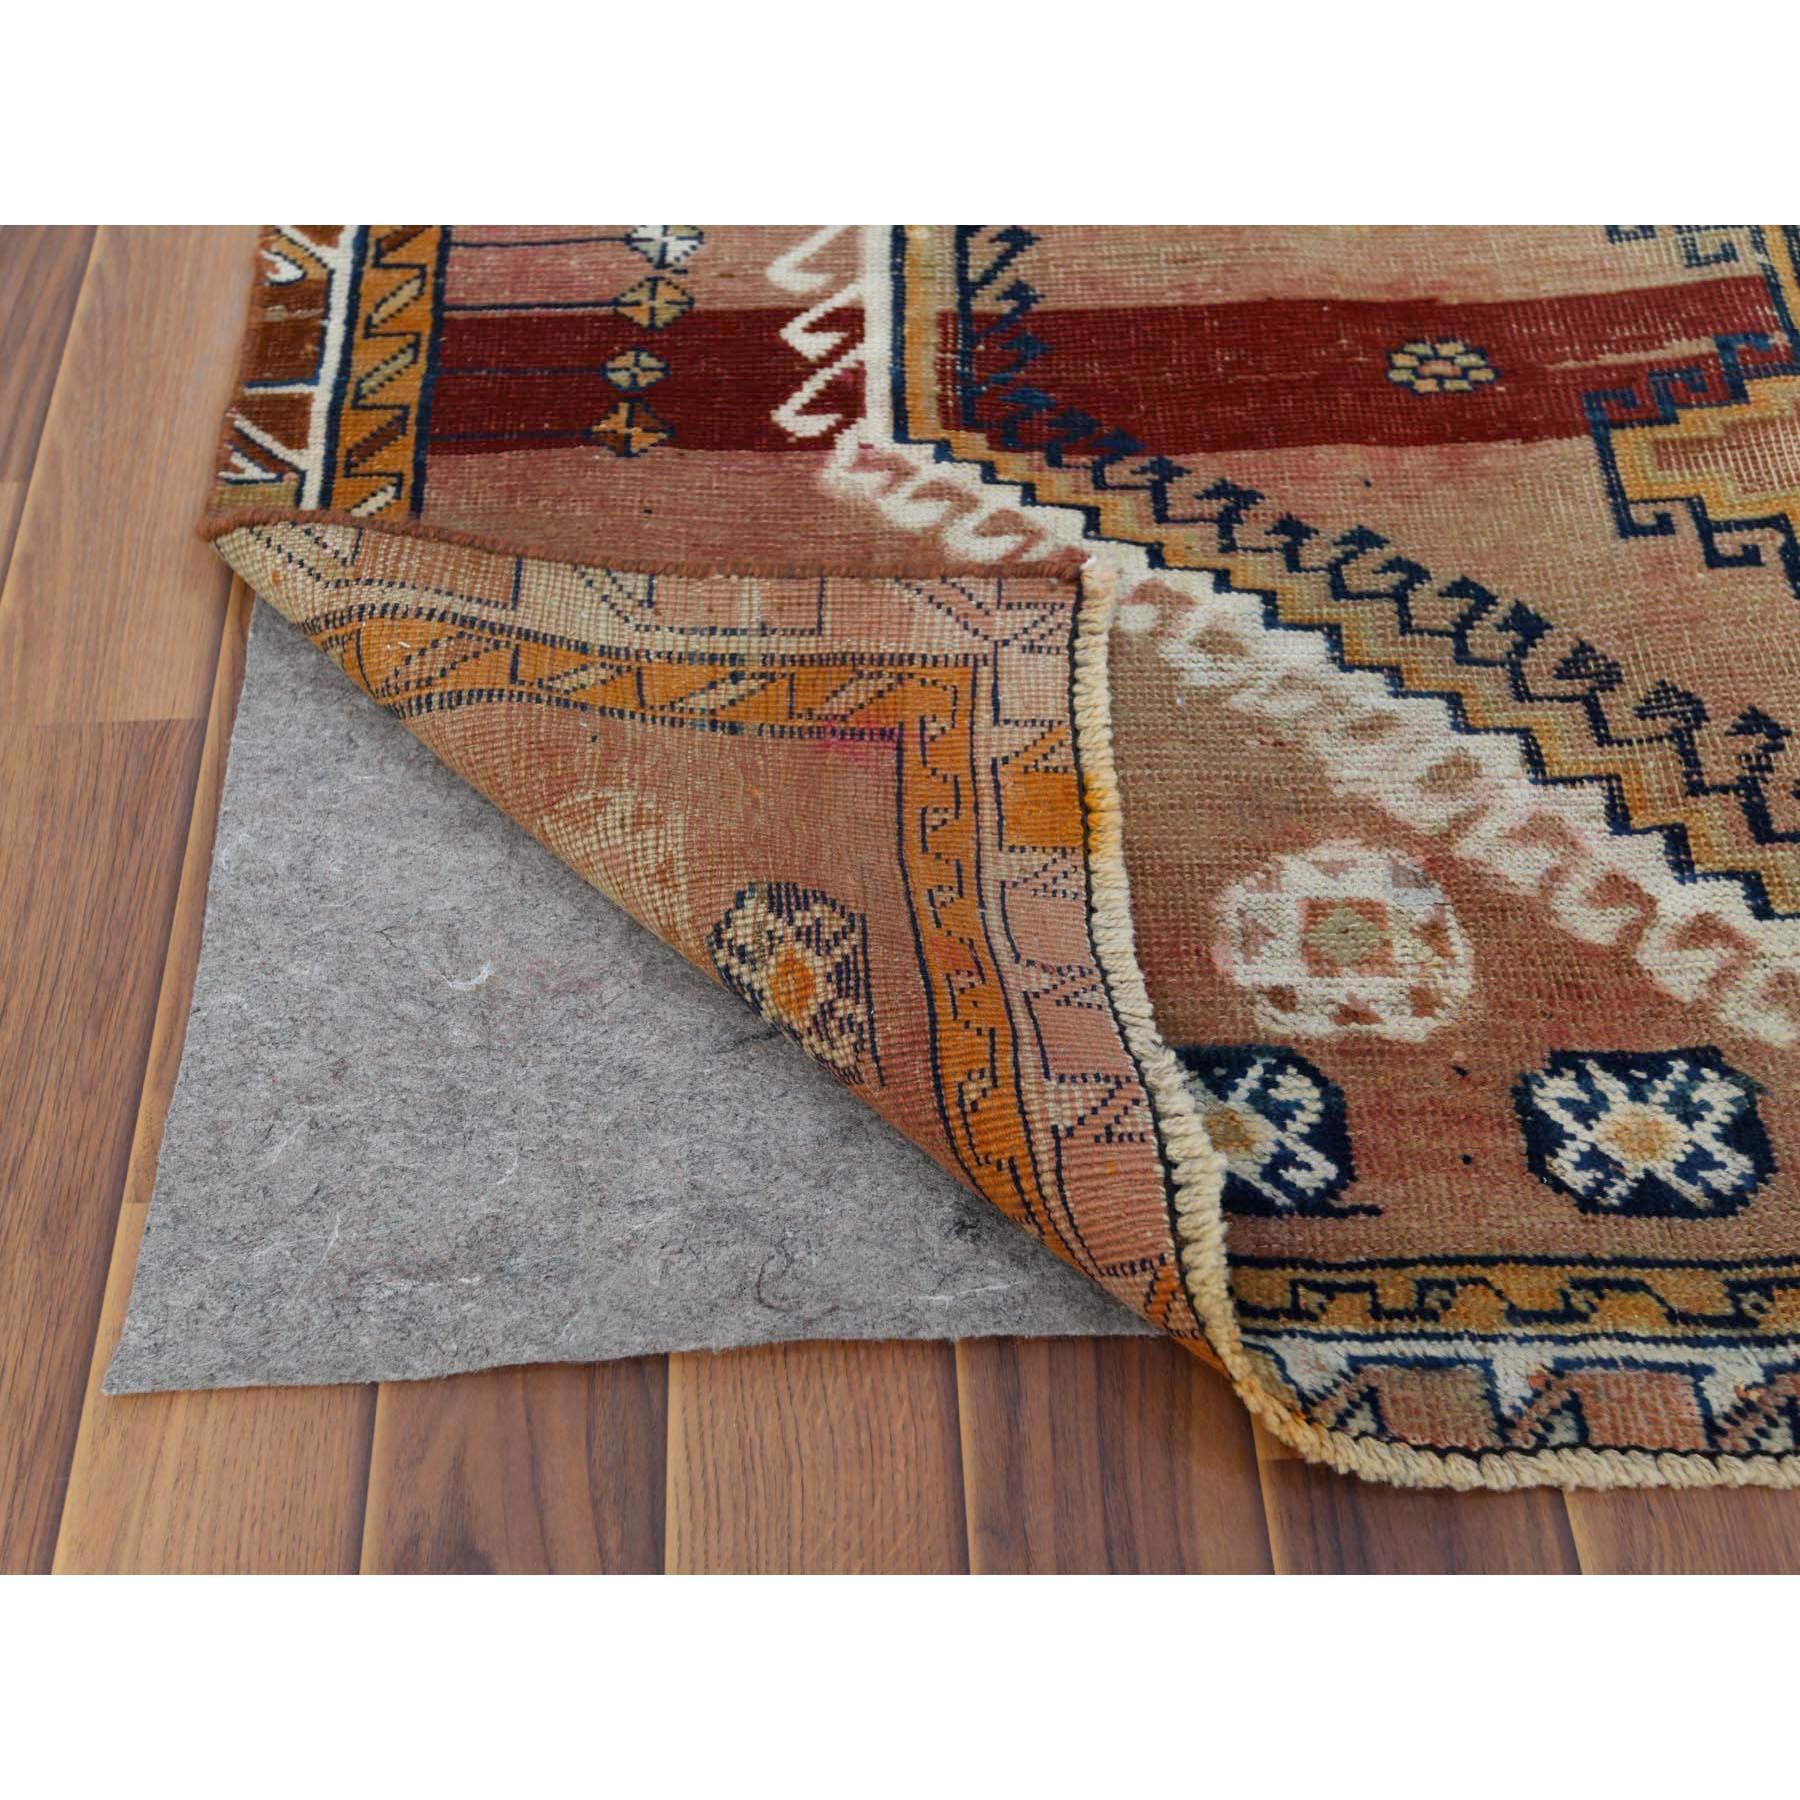 Medieval Vintage Worn Down Tan Color Persian Qashqai Wool Handmade Bohemian Rug For Sale